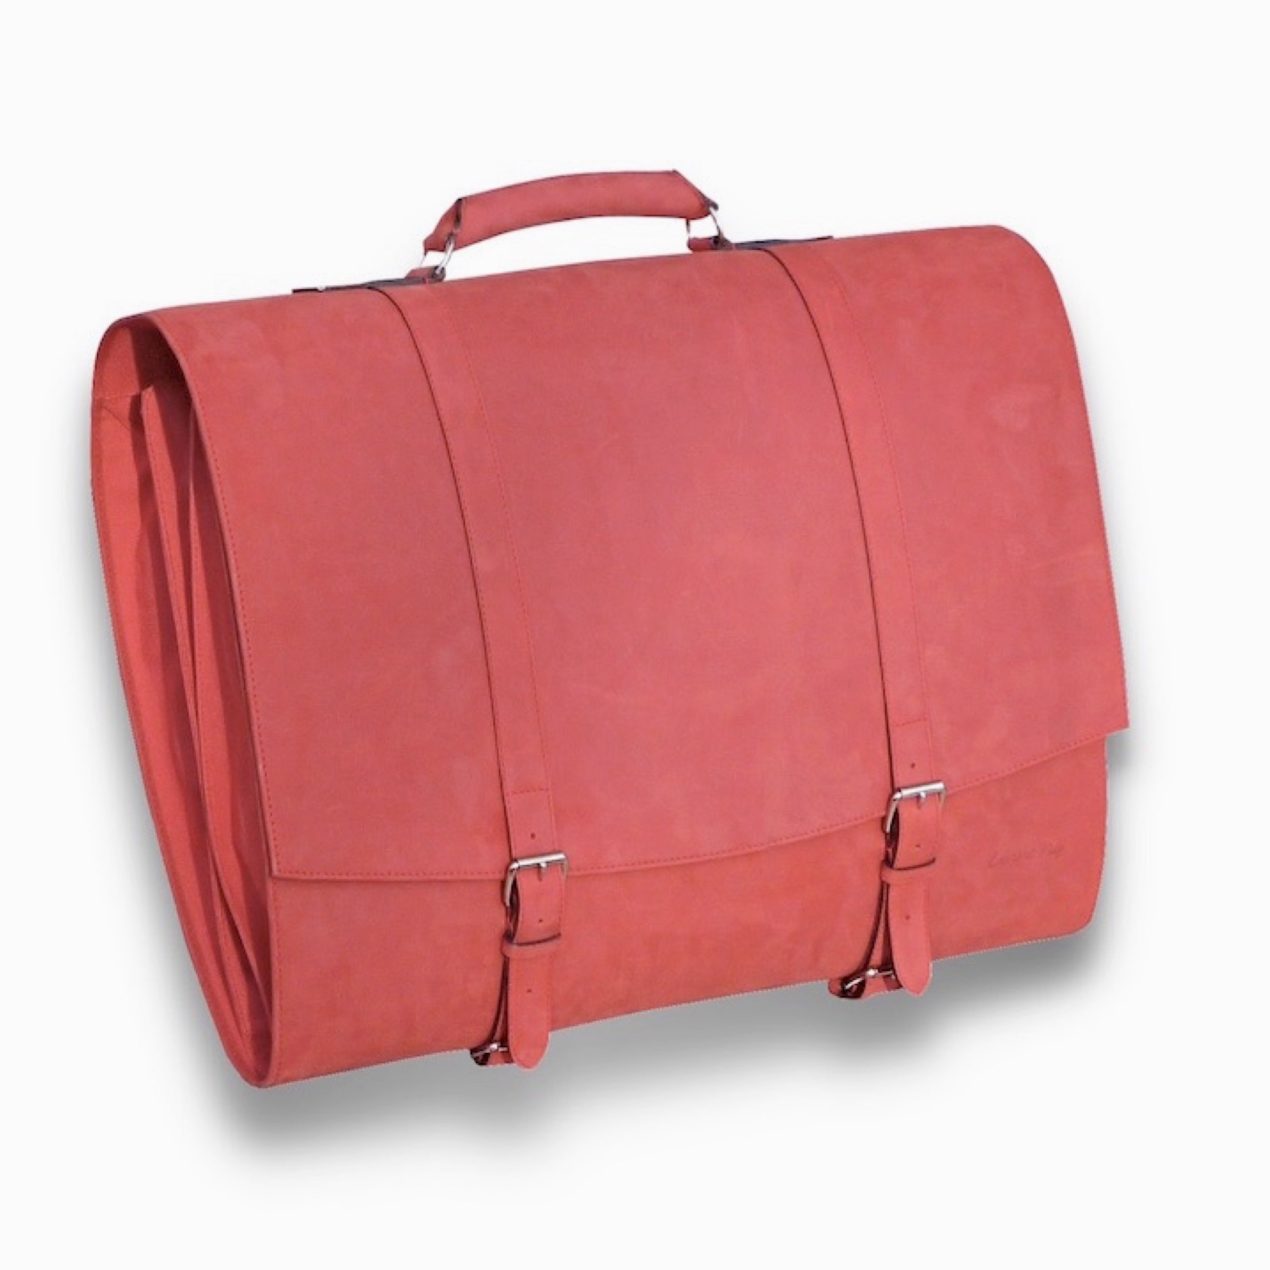 Voyager Bag - Back pack red leather Roadster and Cabriolet